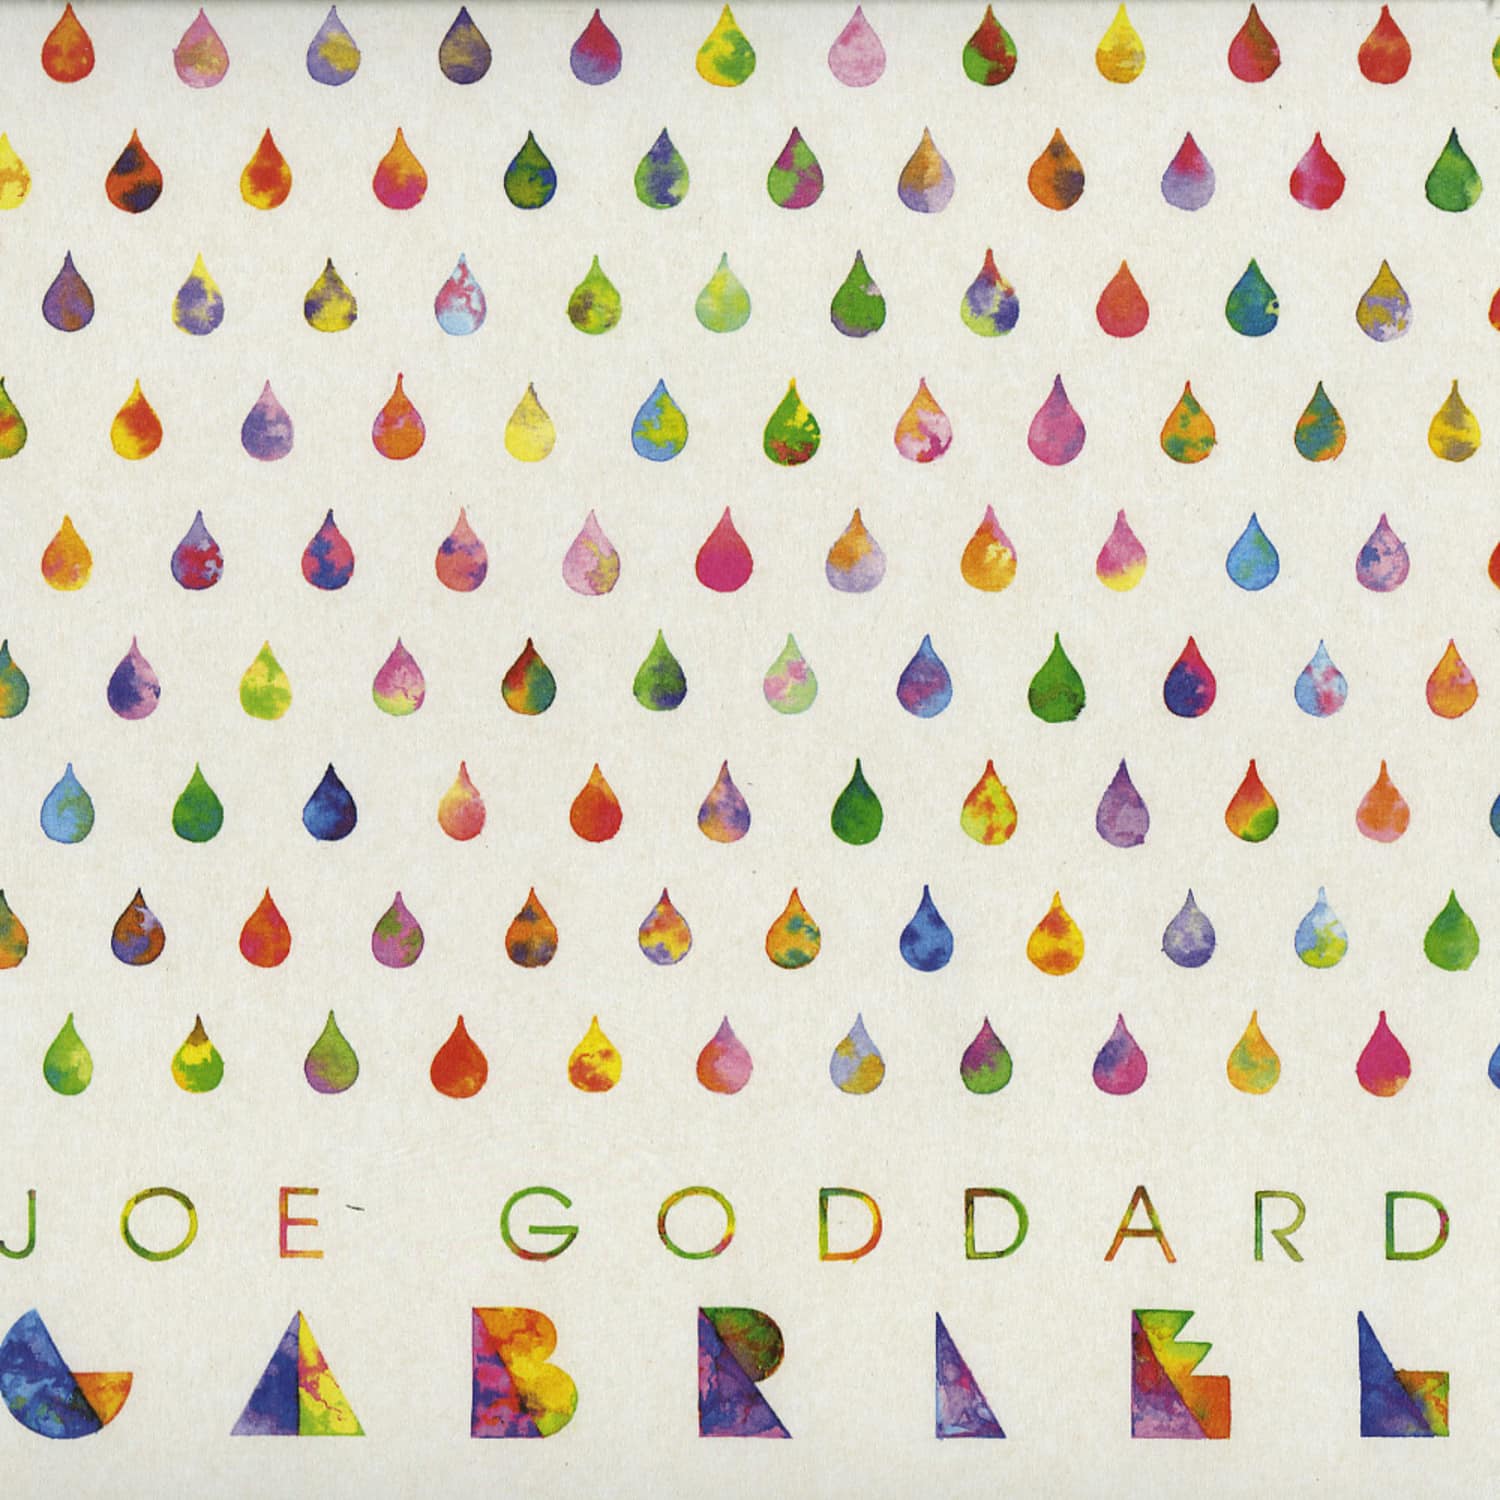 Joe Goddard - GABRIEL EP